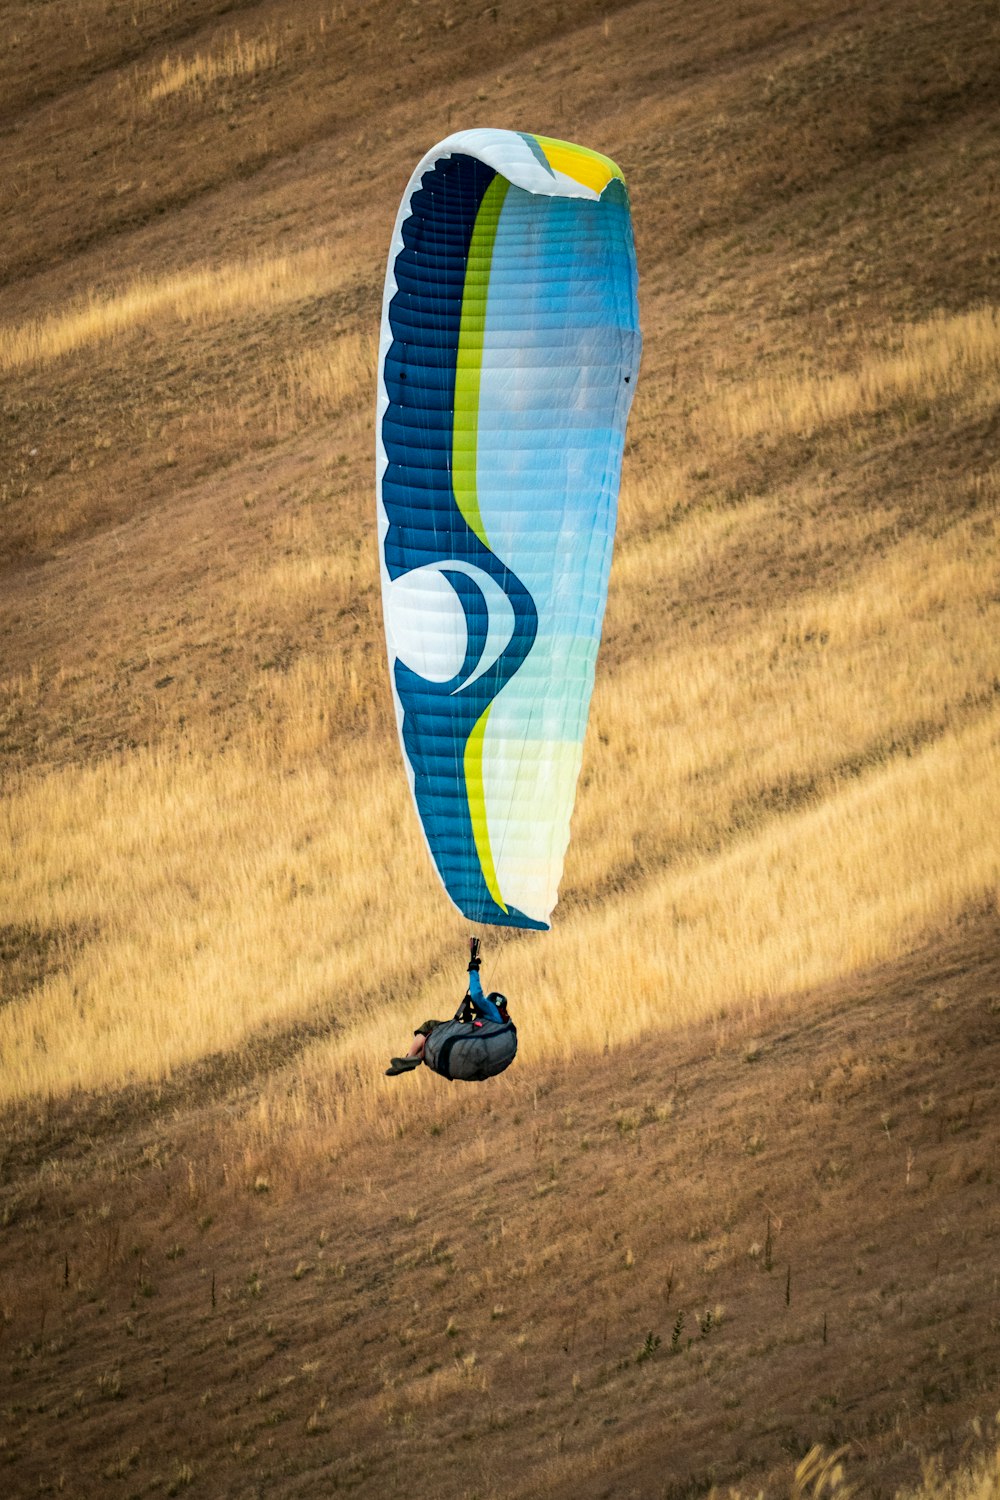 persona appesa al paracadute bianco e blu